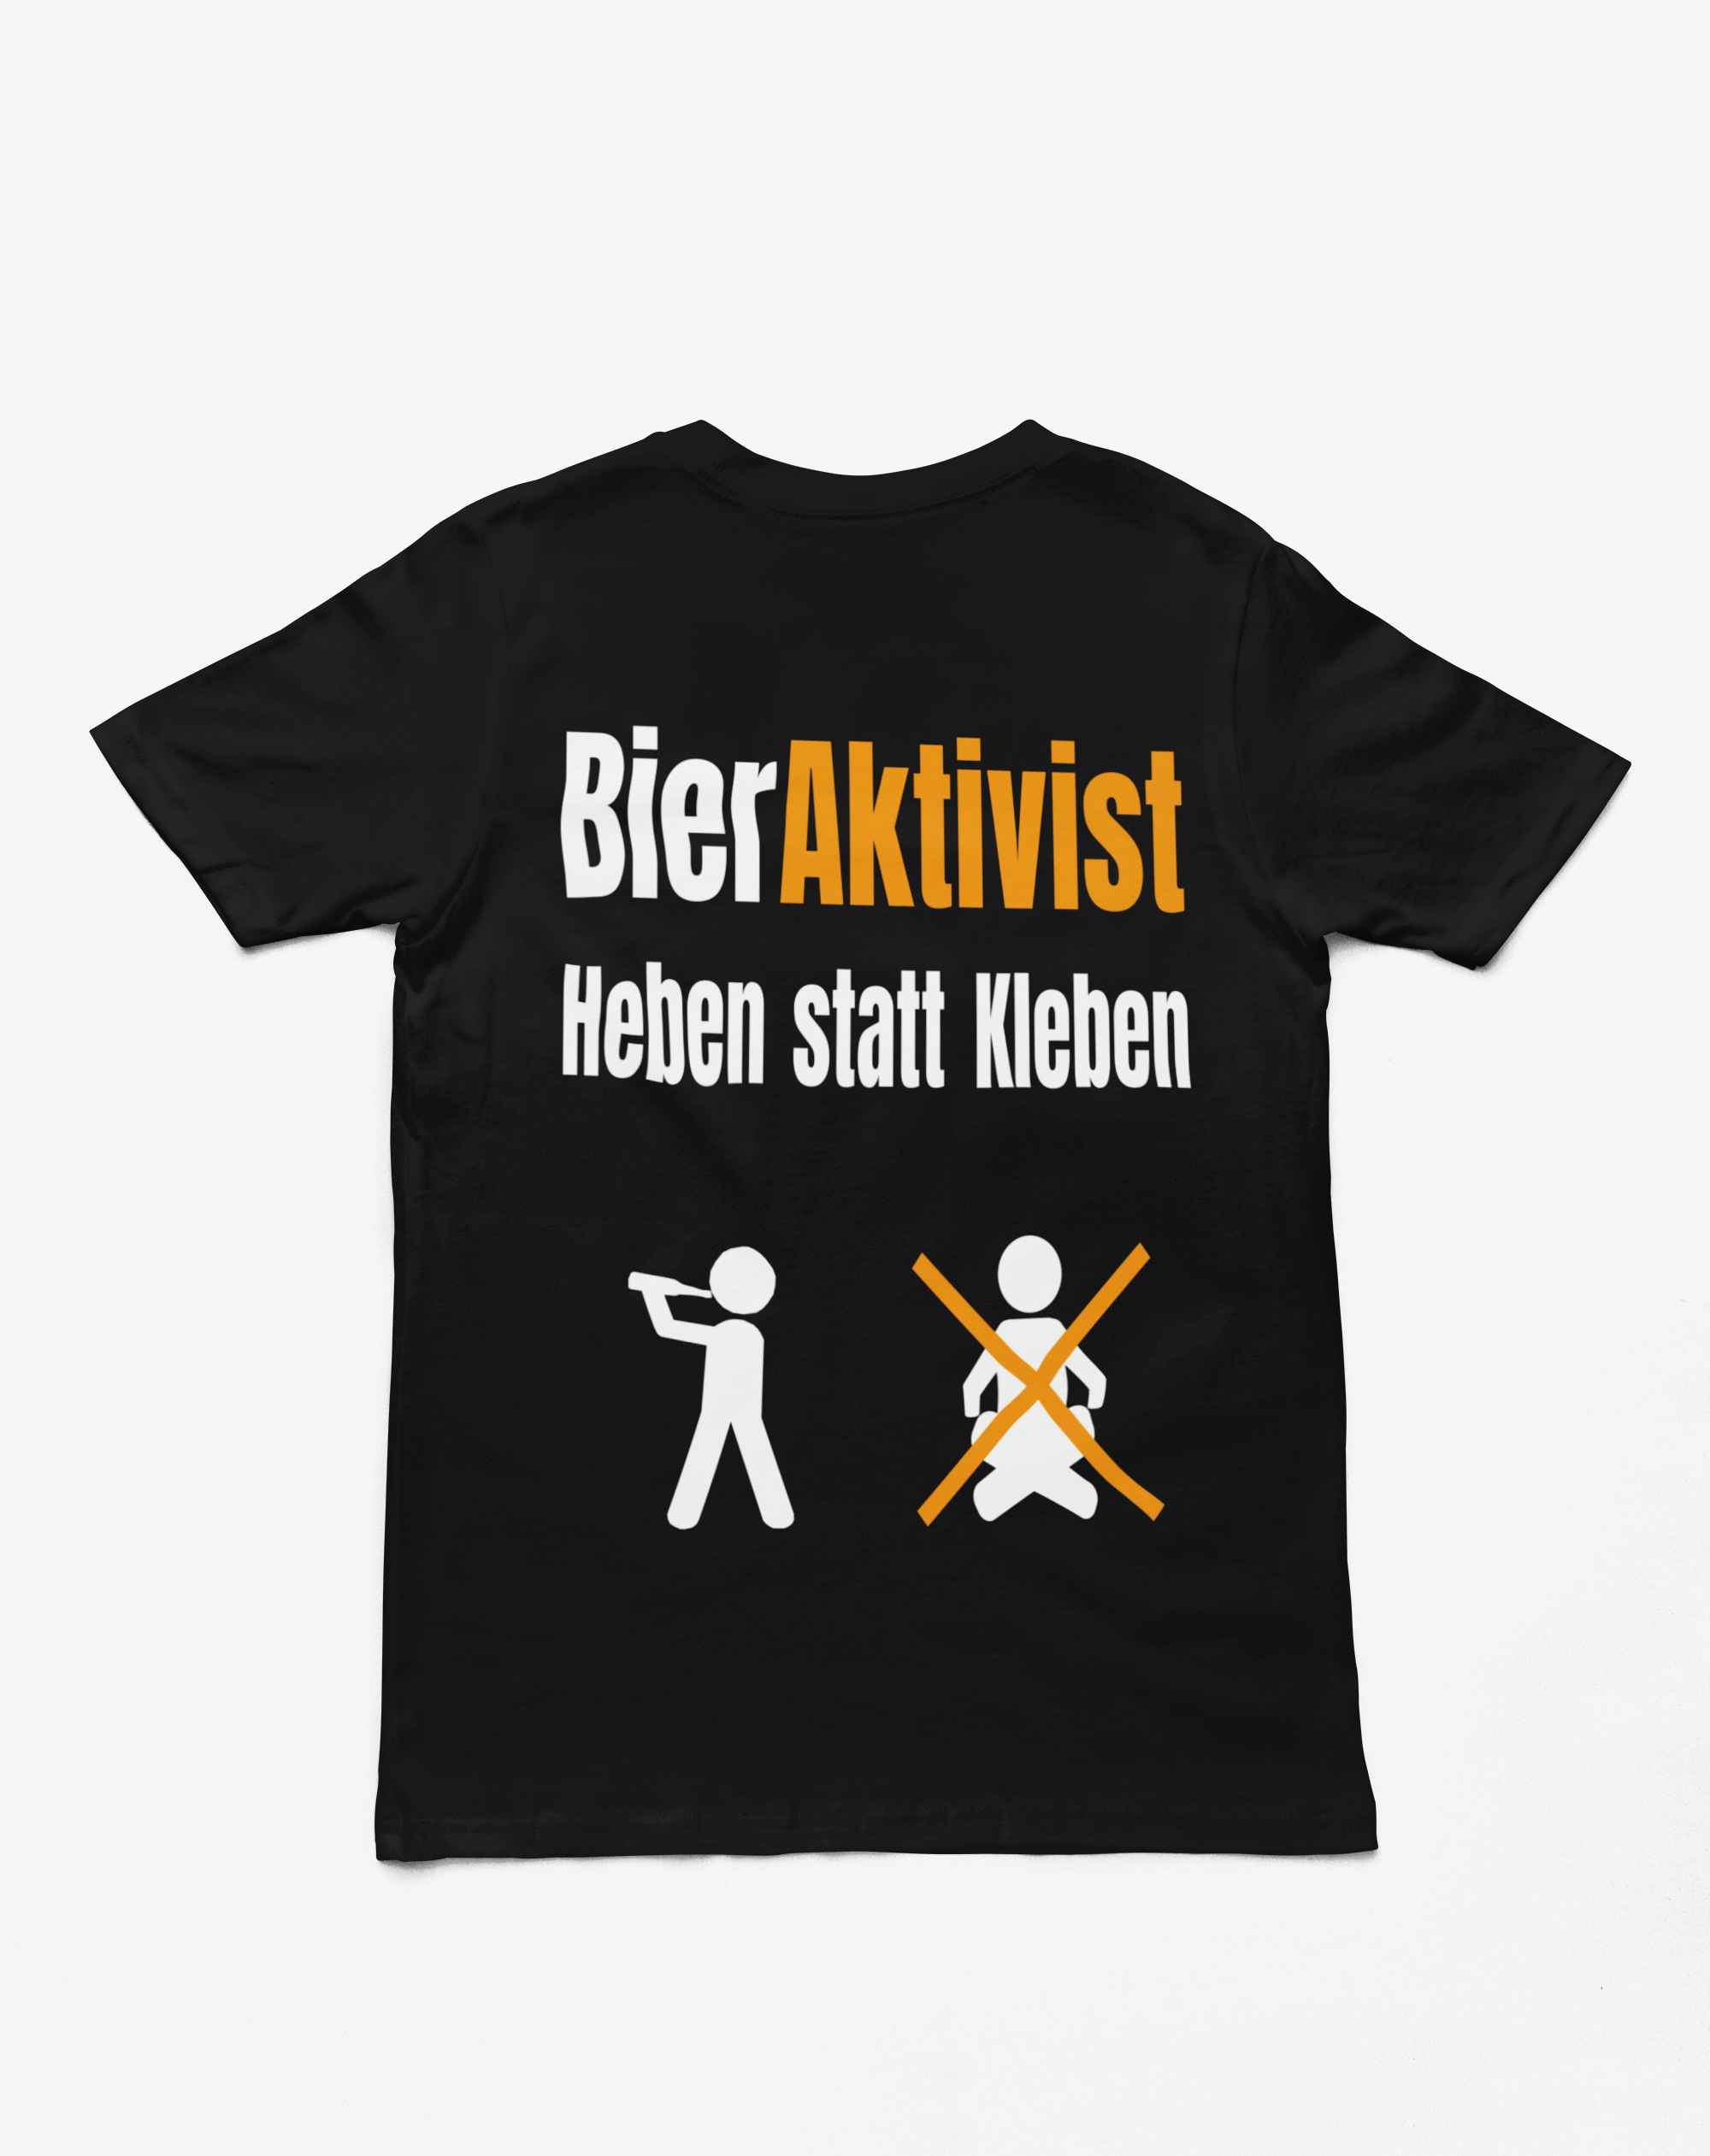 "BierAktivist" Picto T-Shirt